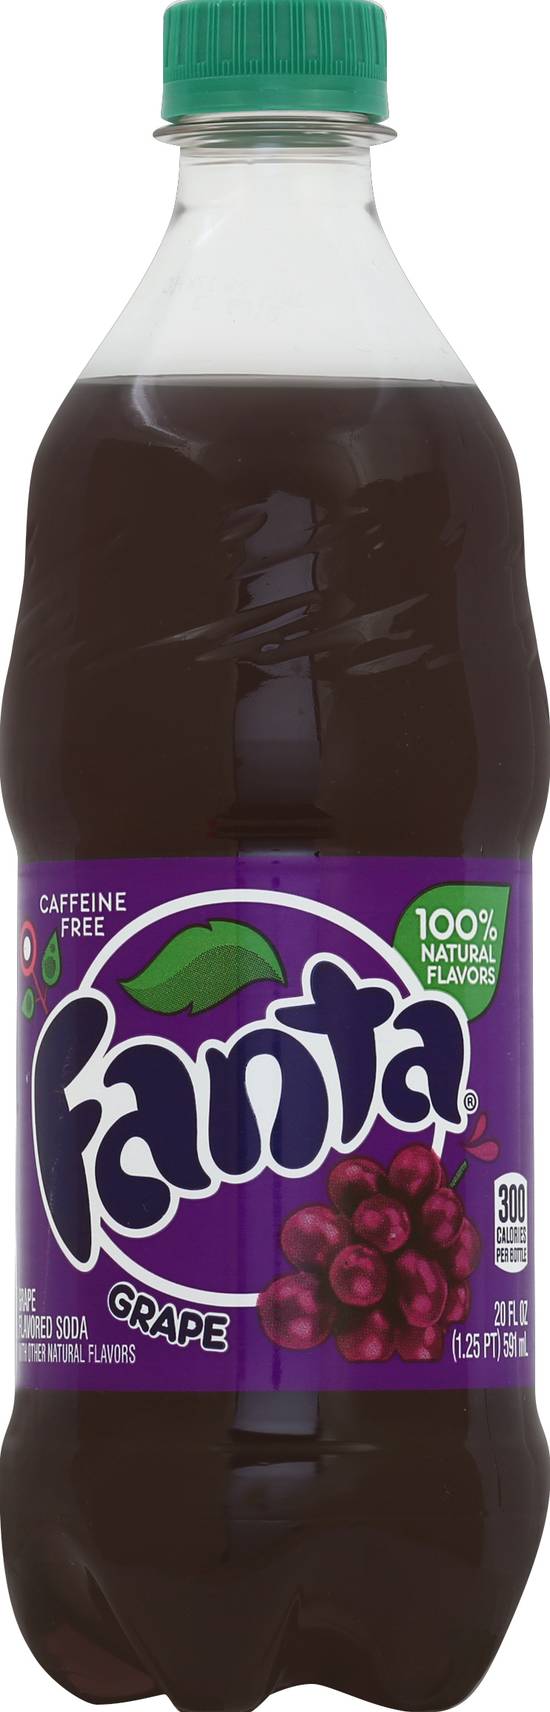 Fanta Soda (20 fl oz) (grape)